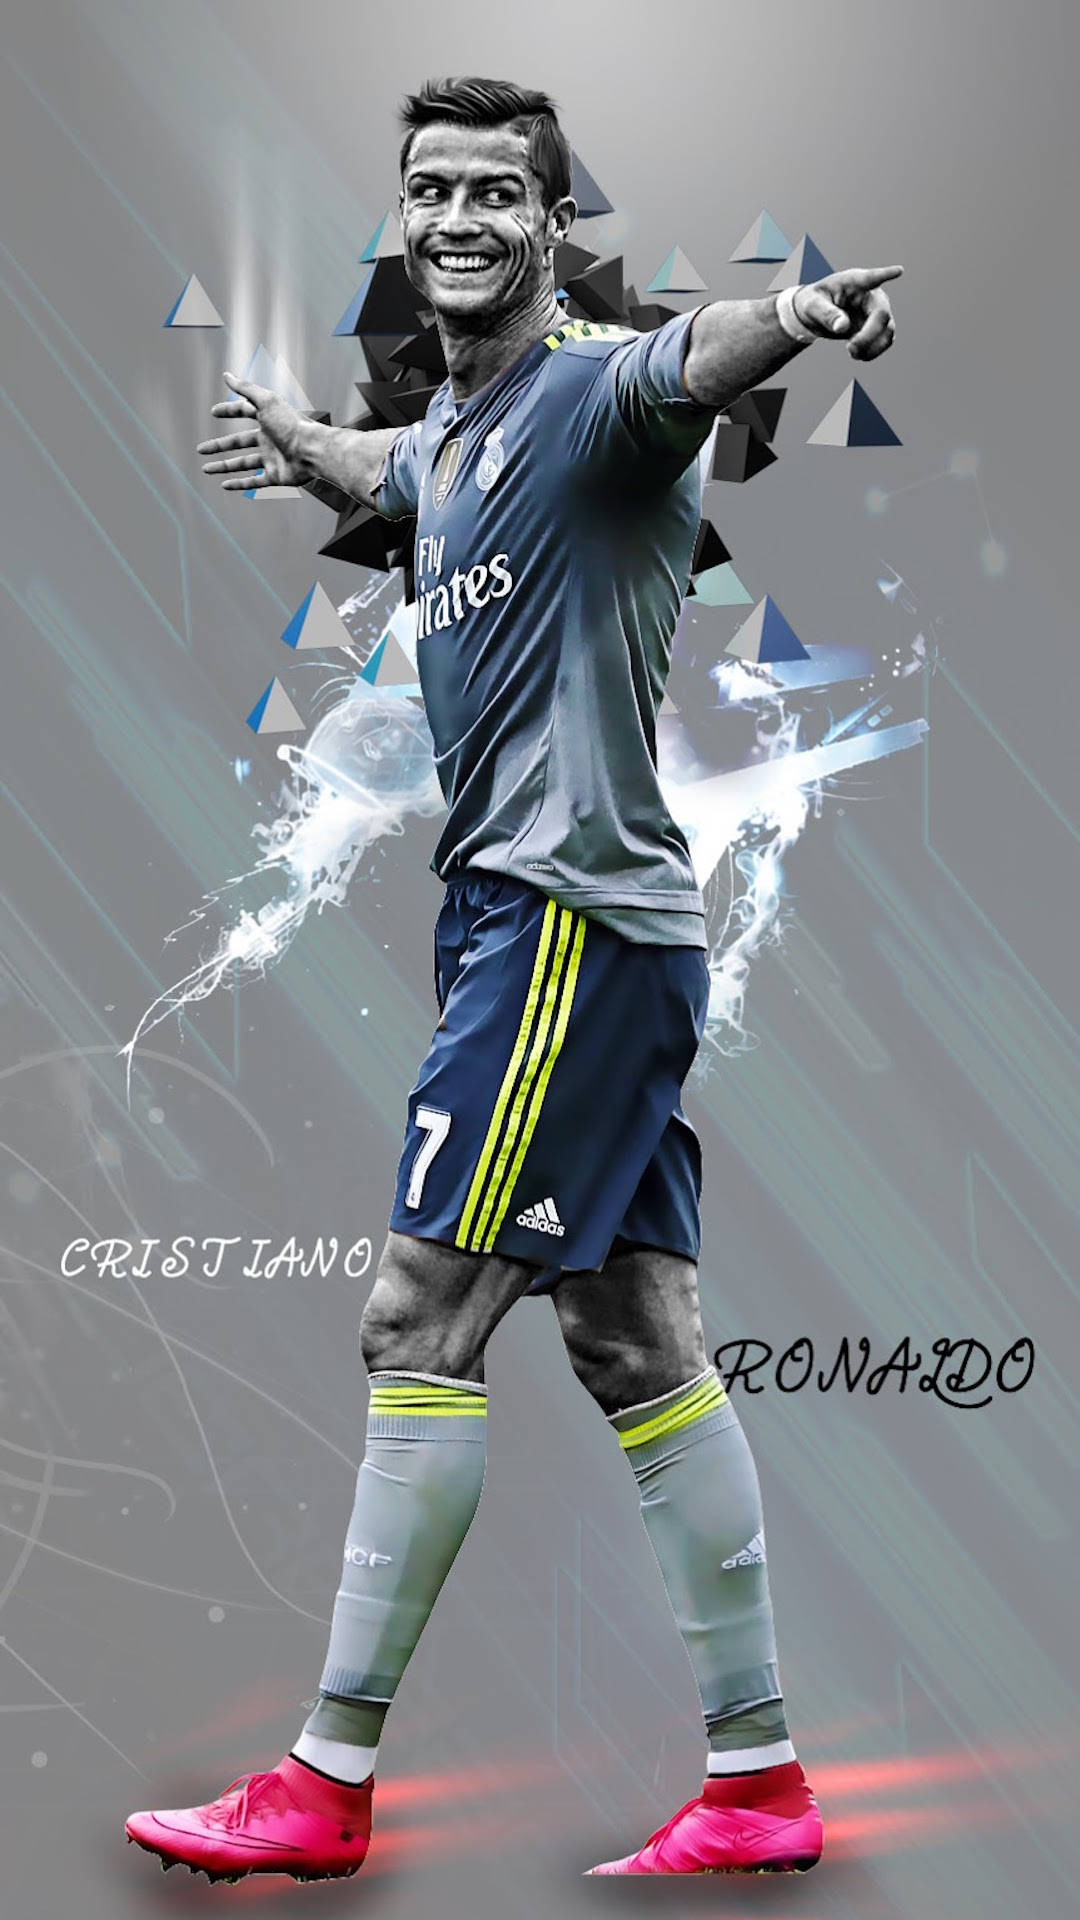 Cristiano Ronaldo in Action - iPhone Wallpaper Wallpaper